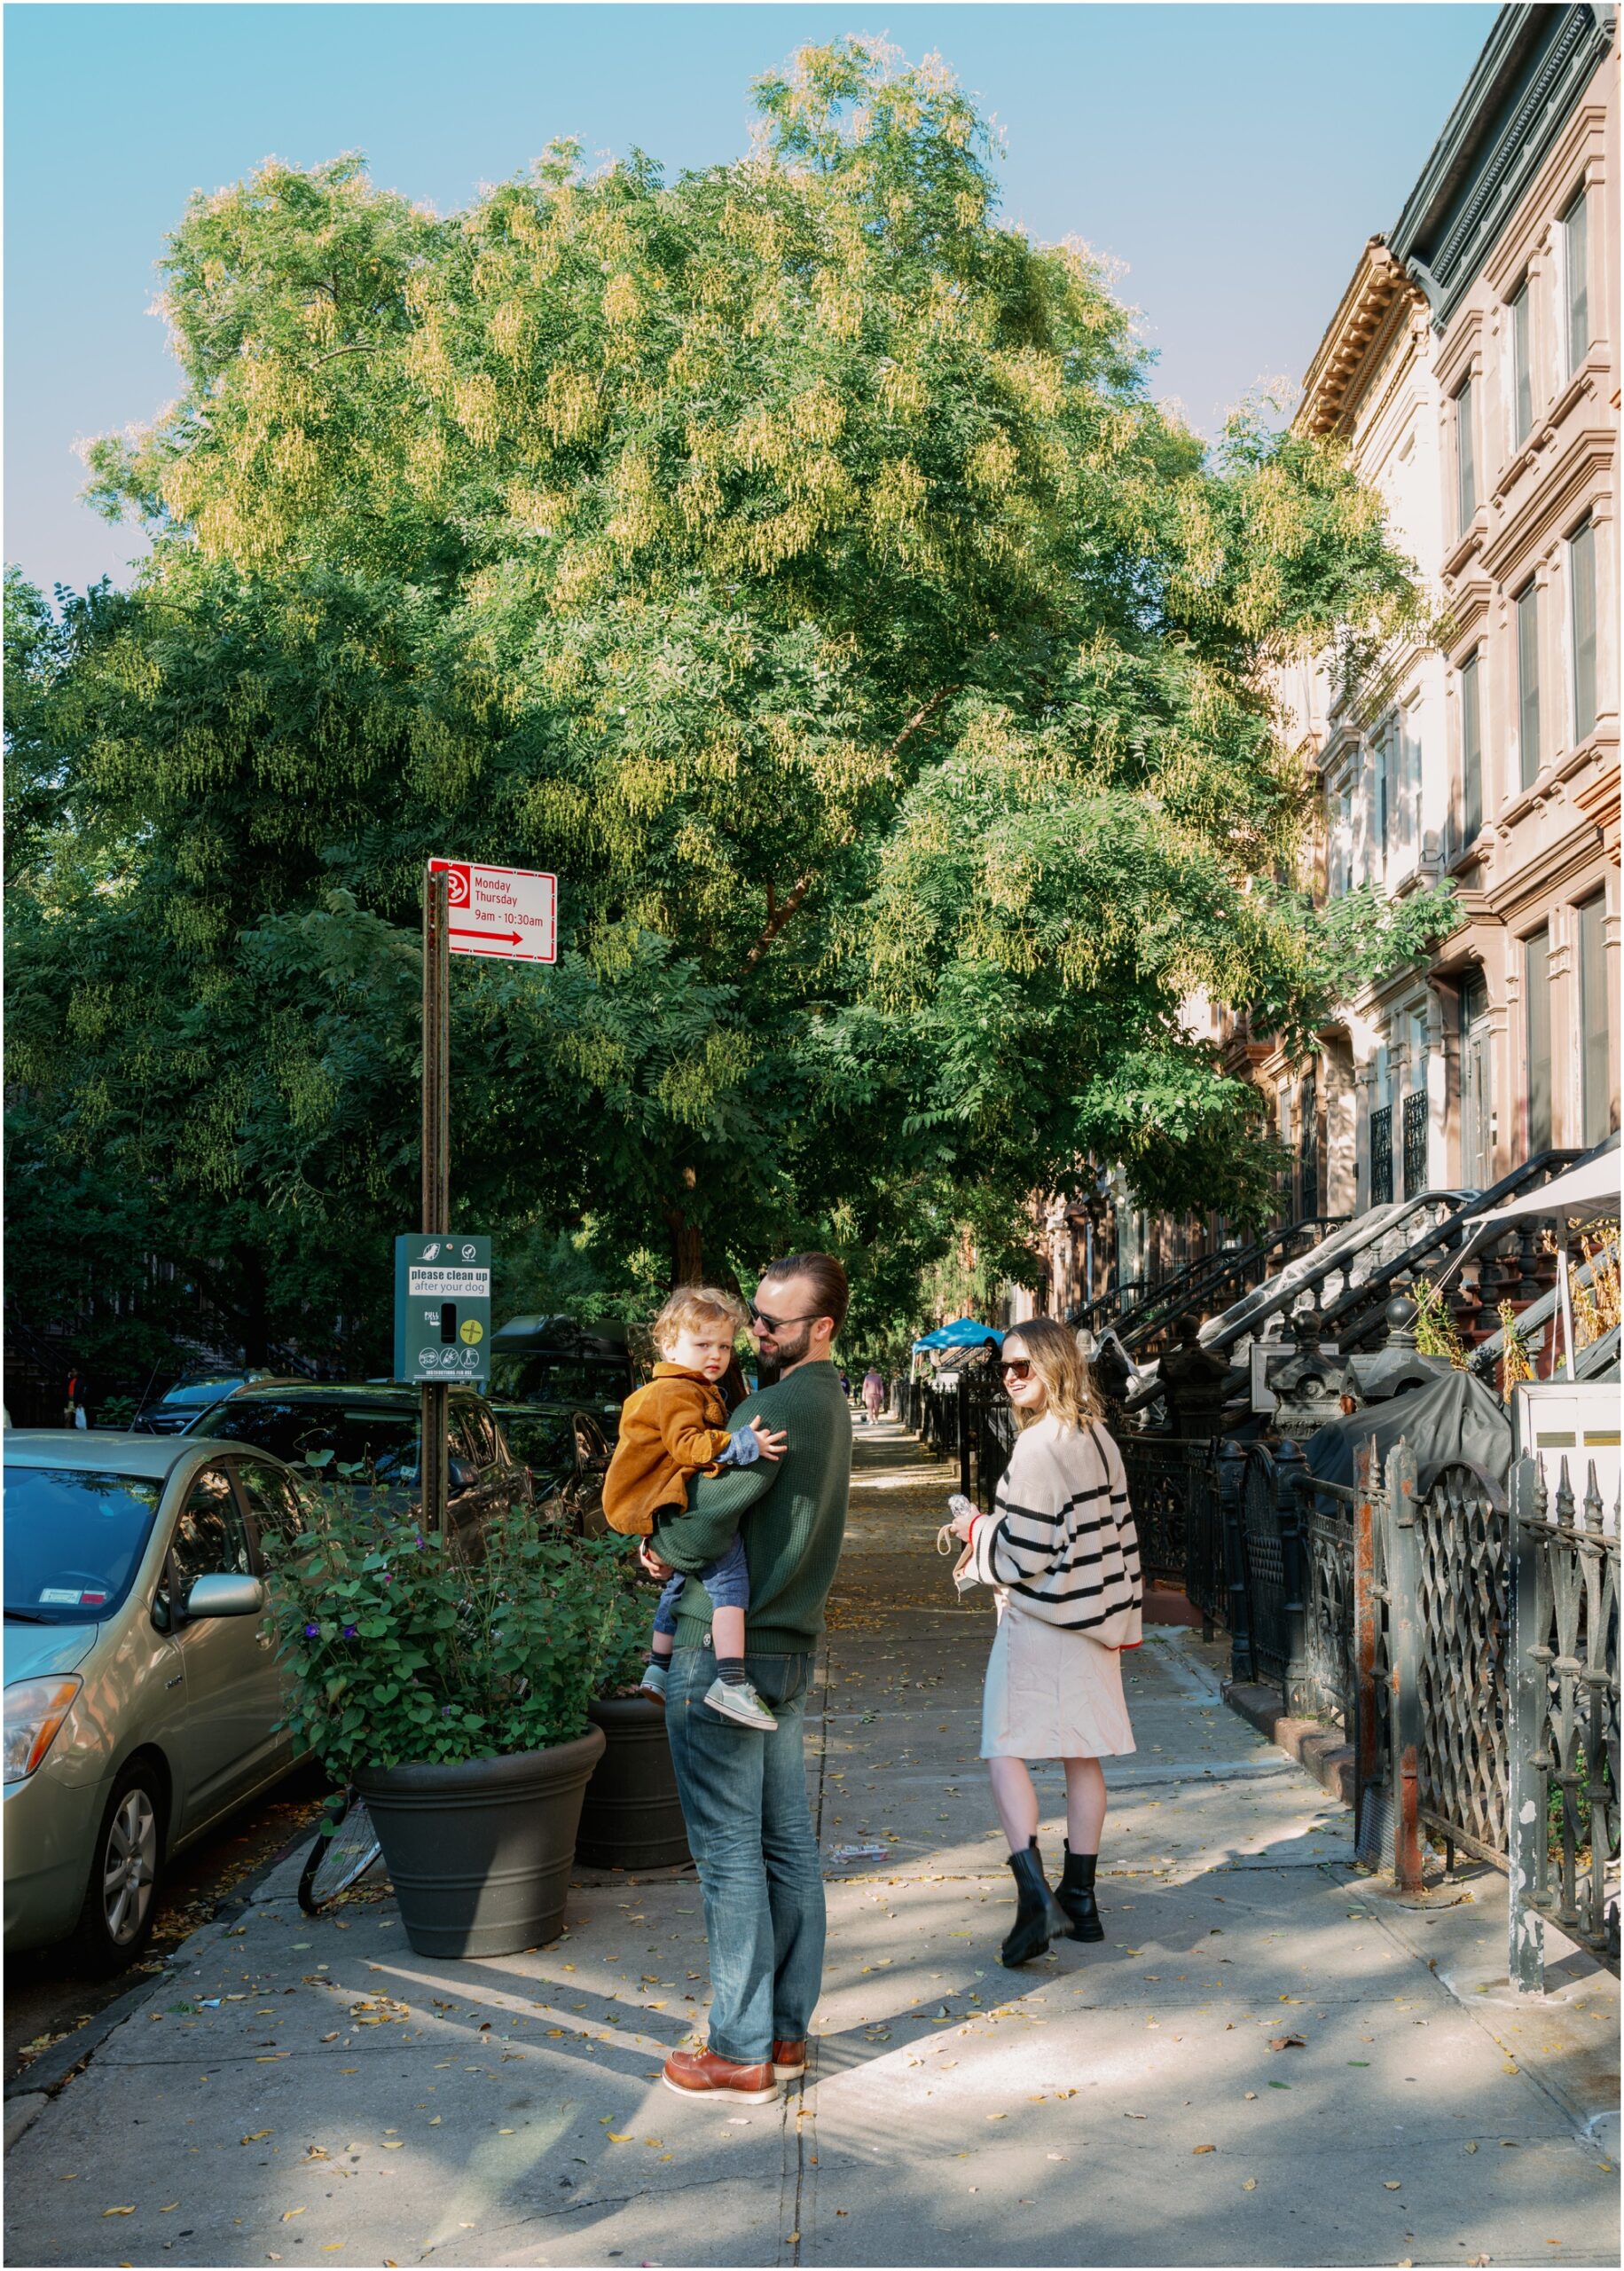 Family walks together on the sidewalk in Brooklyn, New York